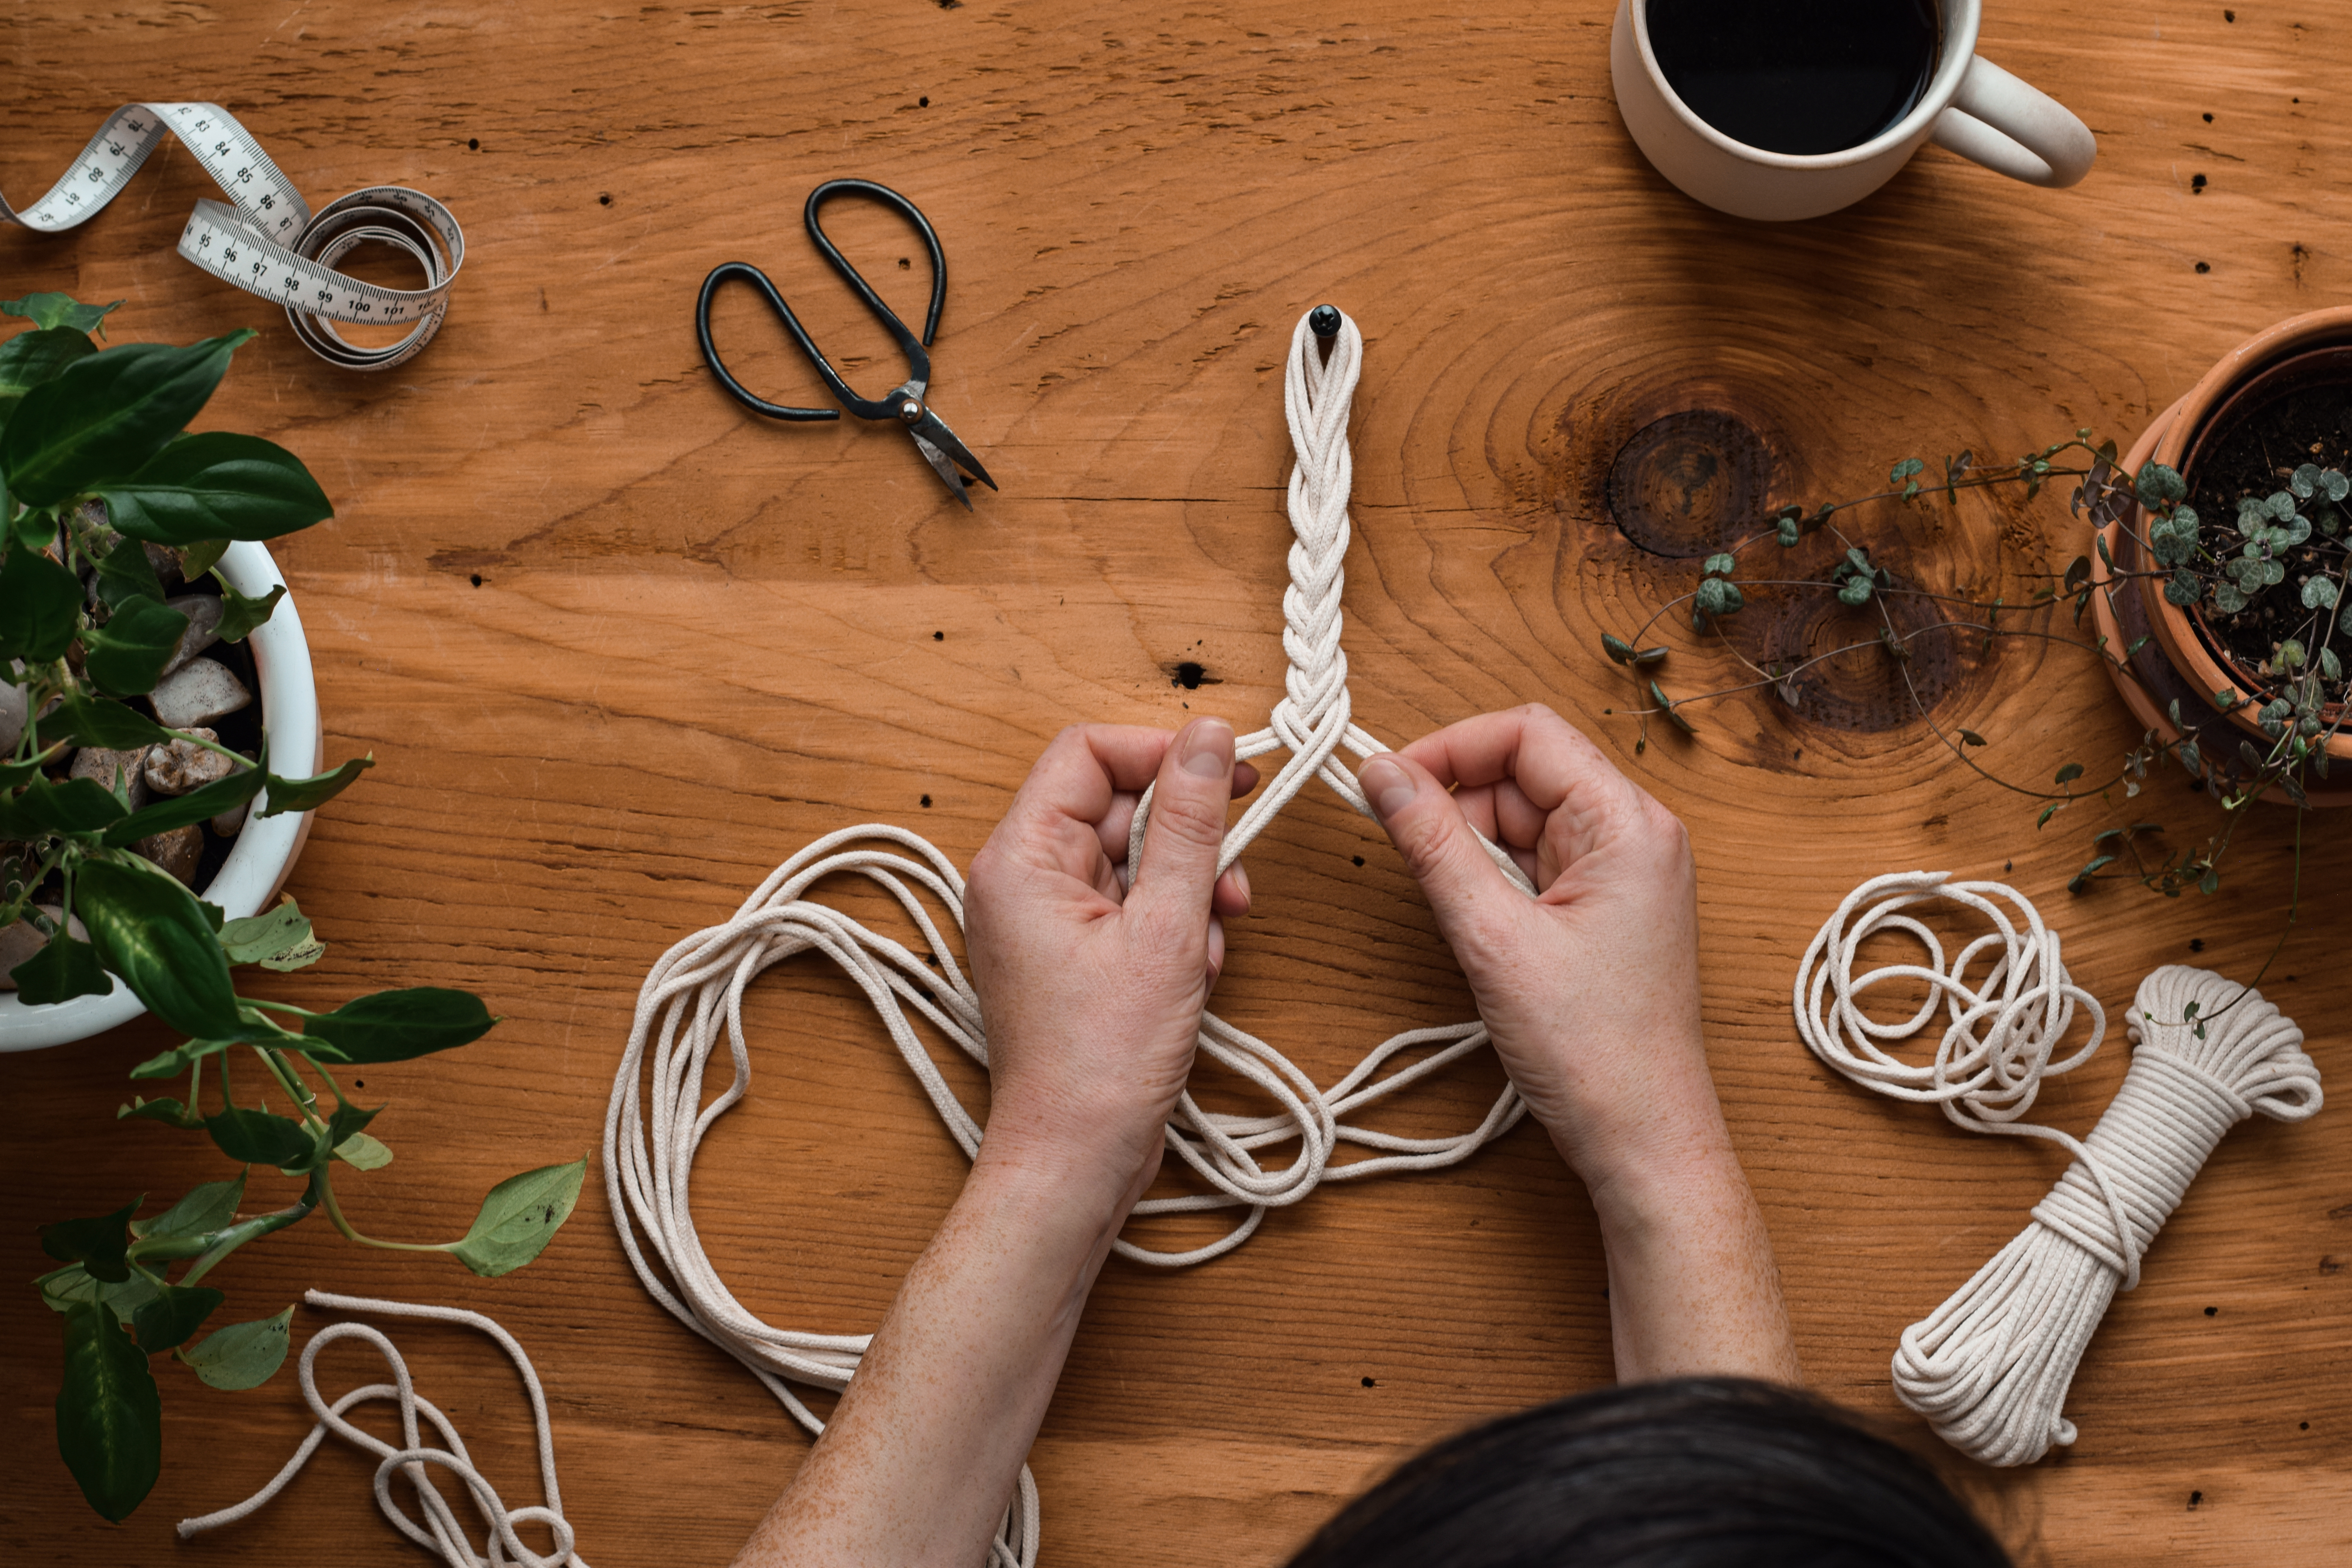 A person tying yarn together